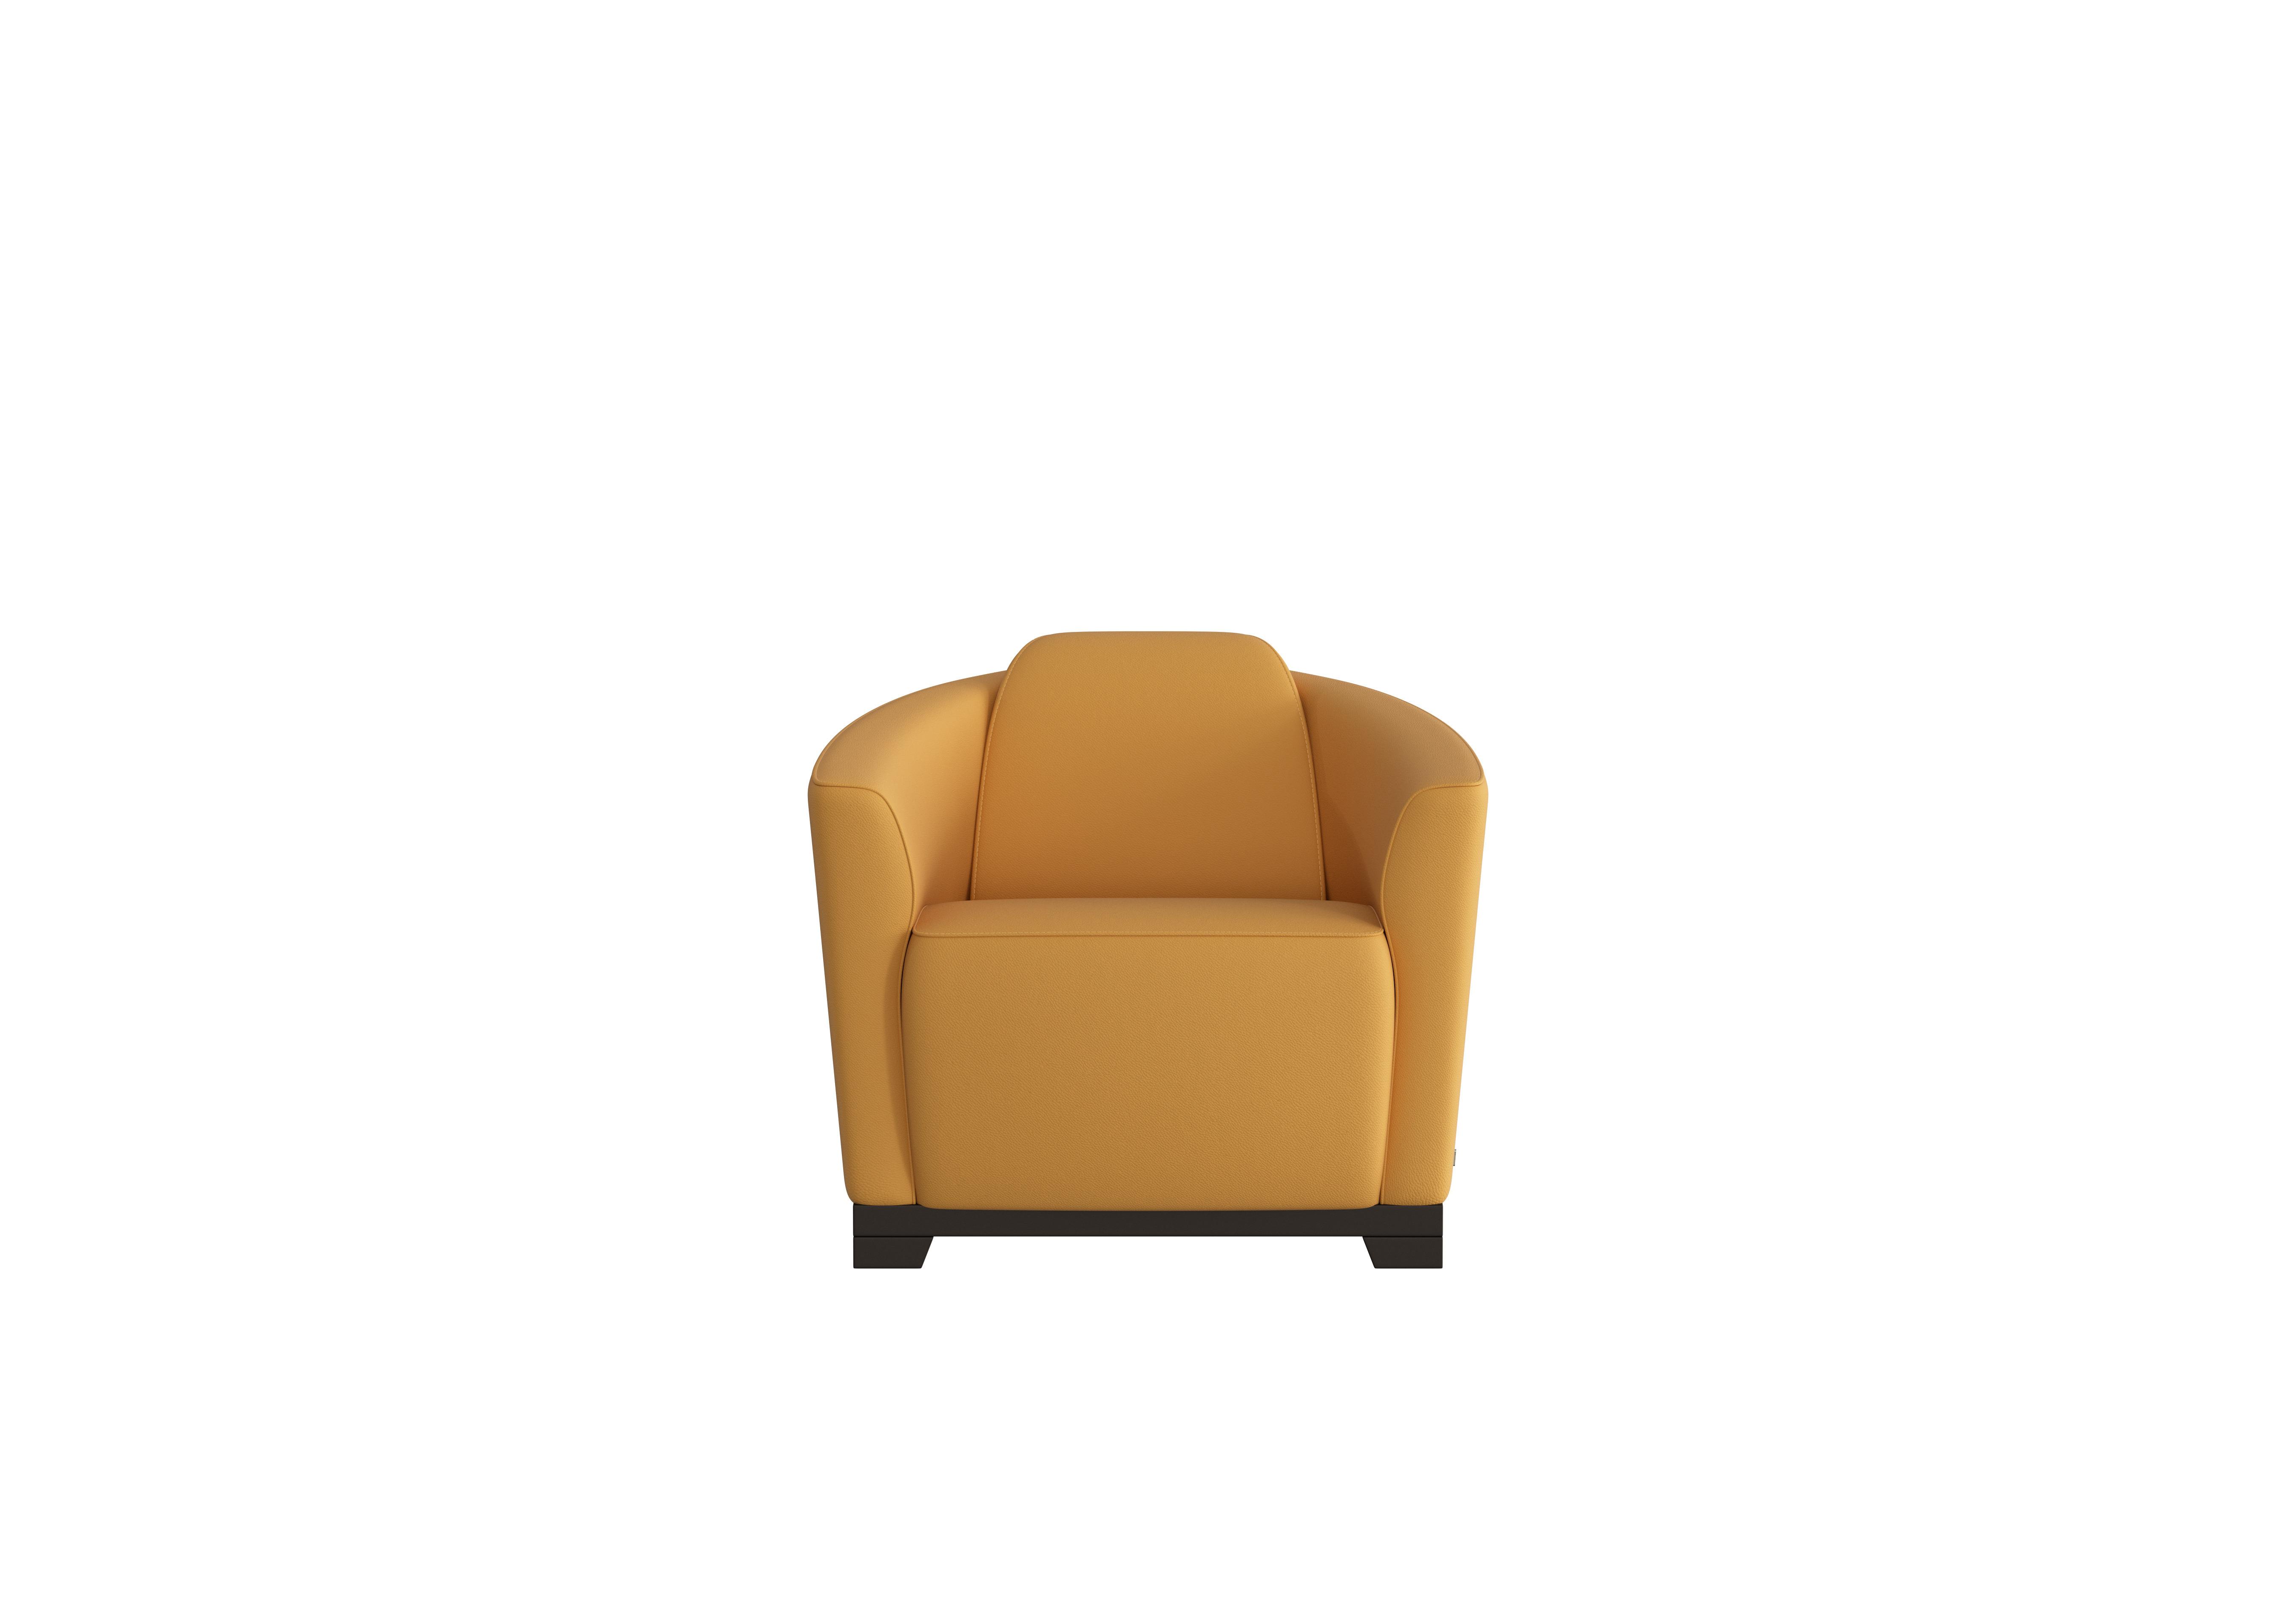 Ketty Leather Accent Chair in Torello Senape 355 on Furniture Village